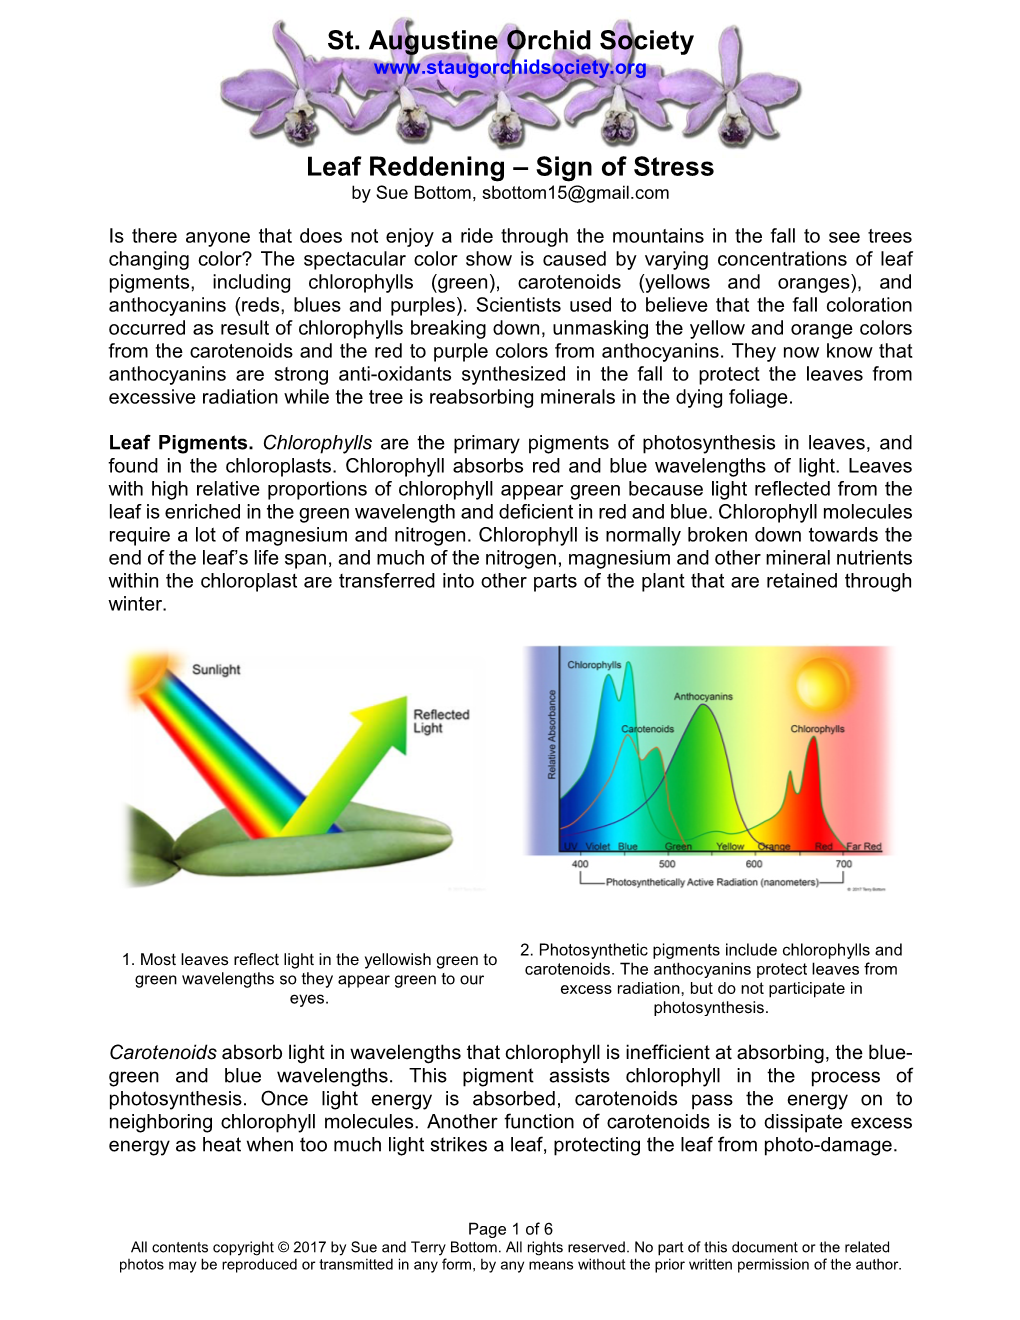 Leaf Reddening – Sign of Stress by Sue Bottom, Sbottom15@Gmail.Com